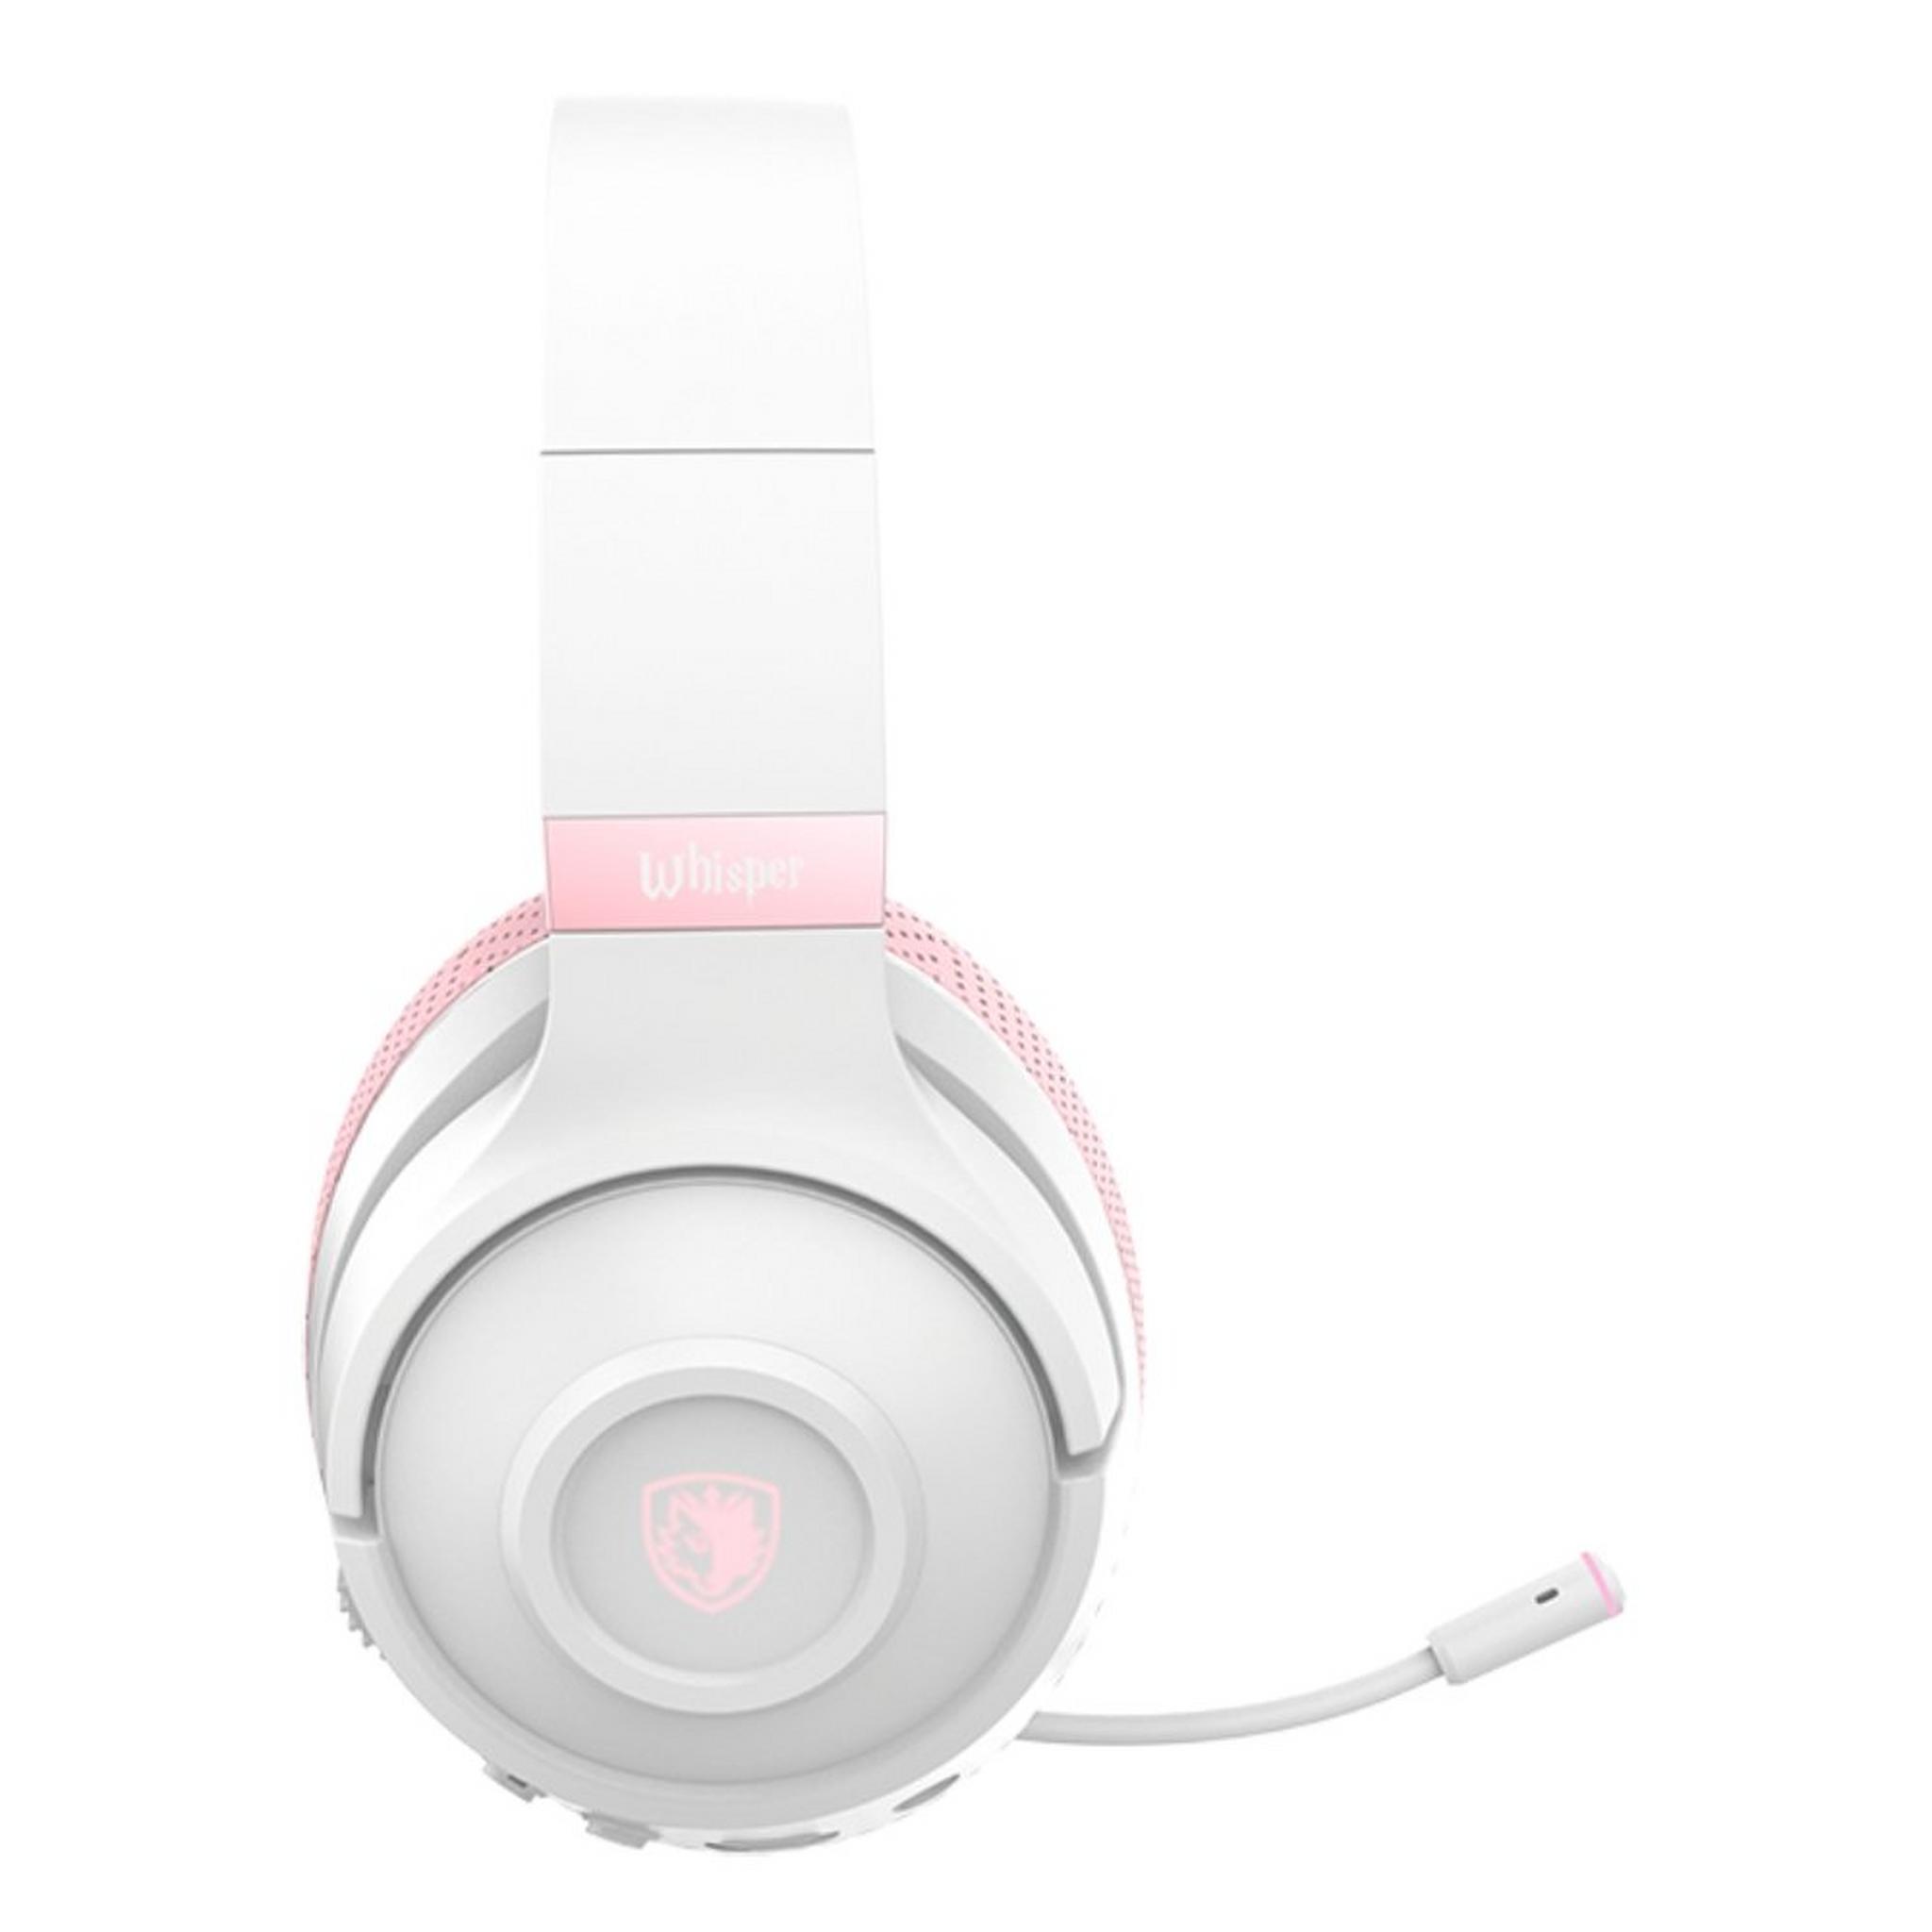 Sades Whisper Wireless Bluetooth Gaming Headset - SA-205- Pink